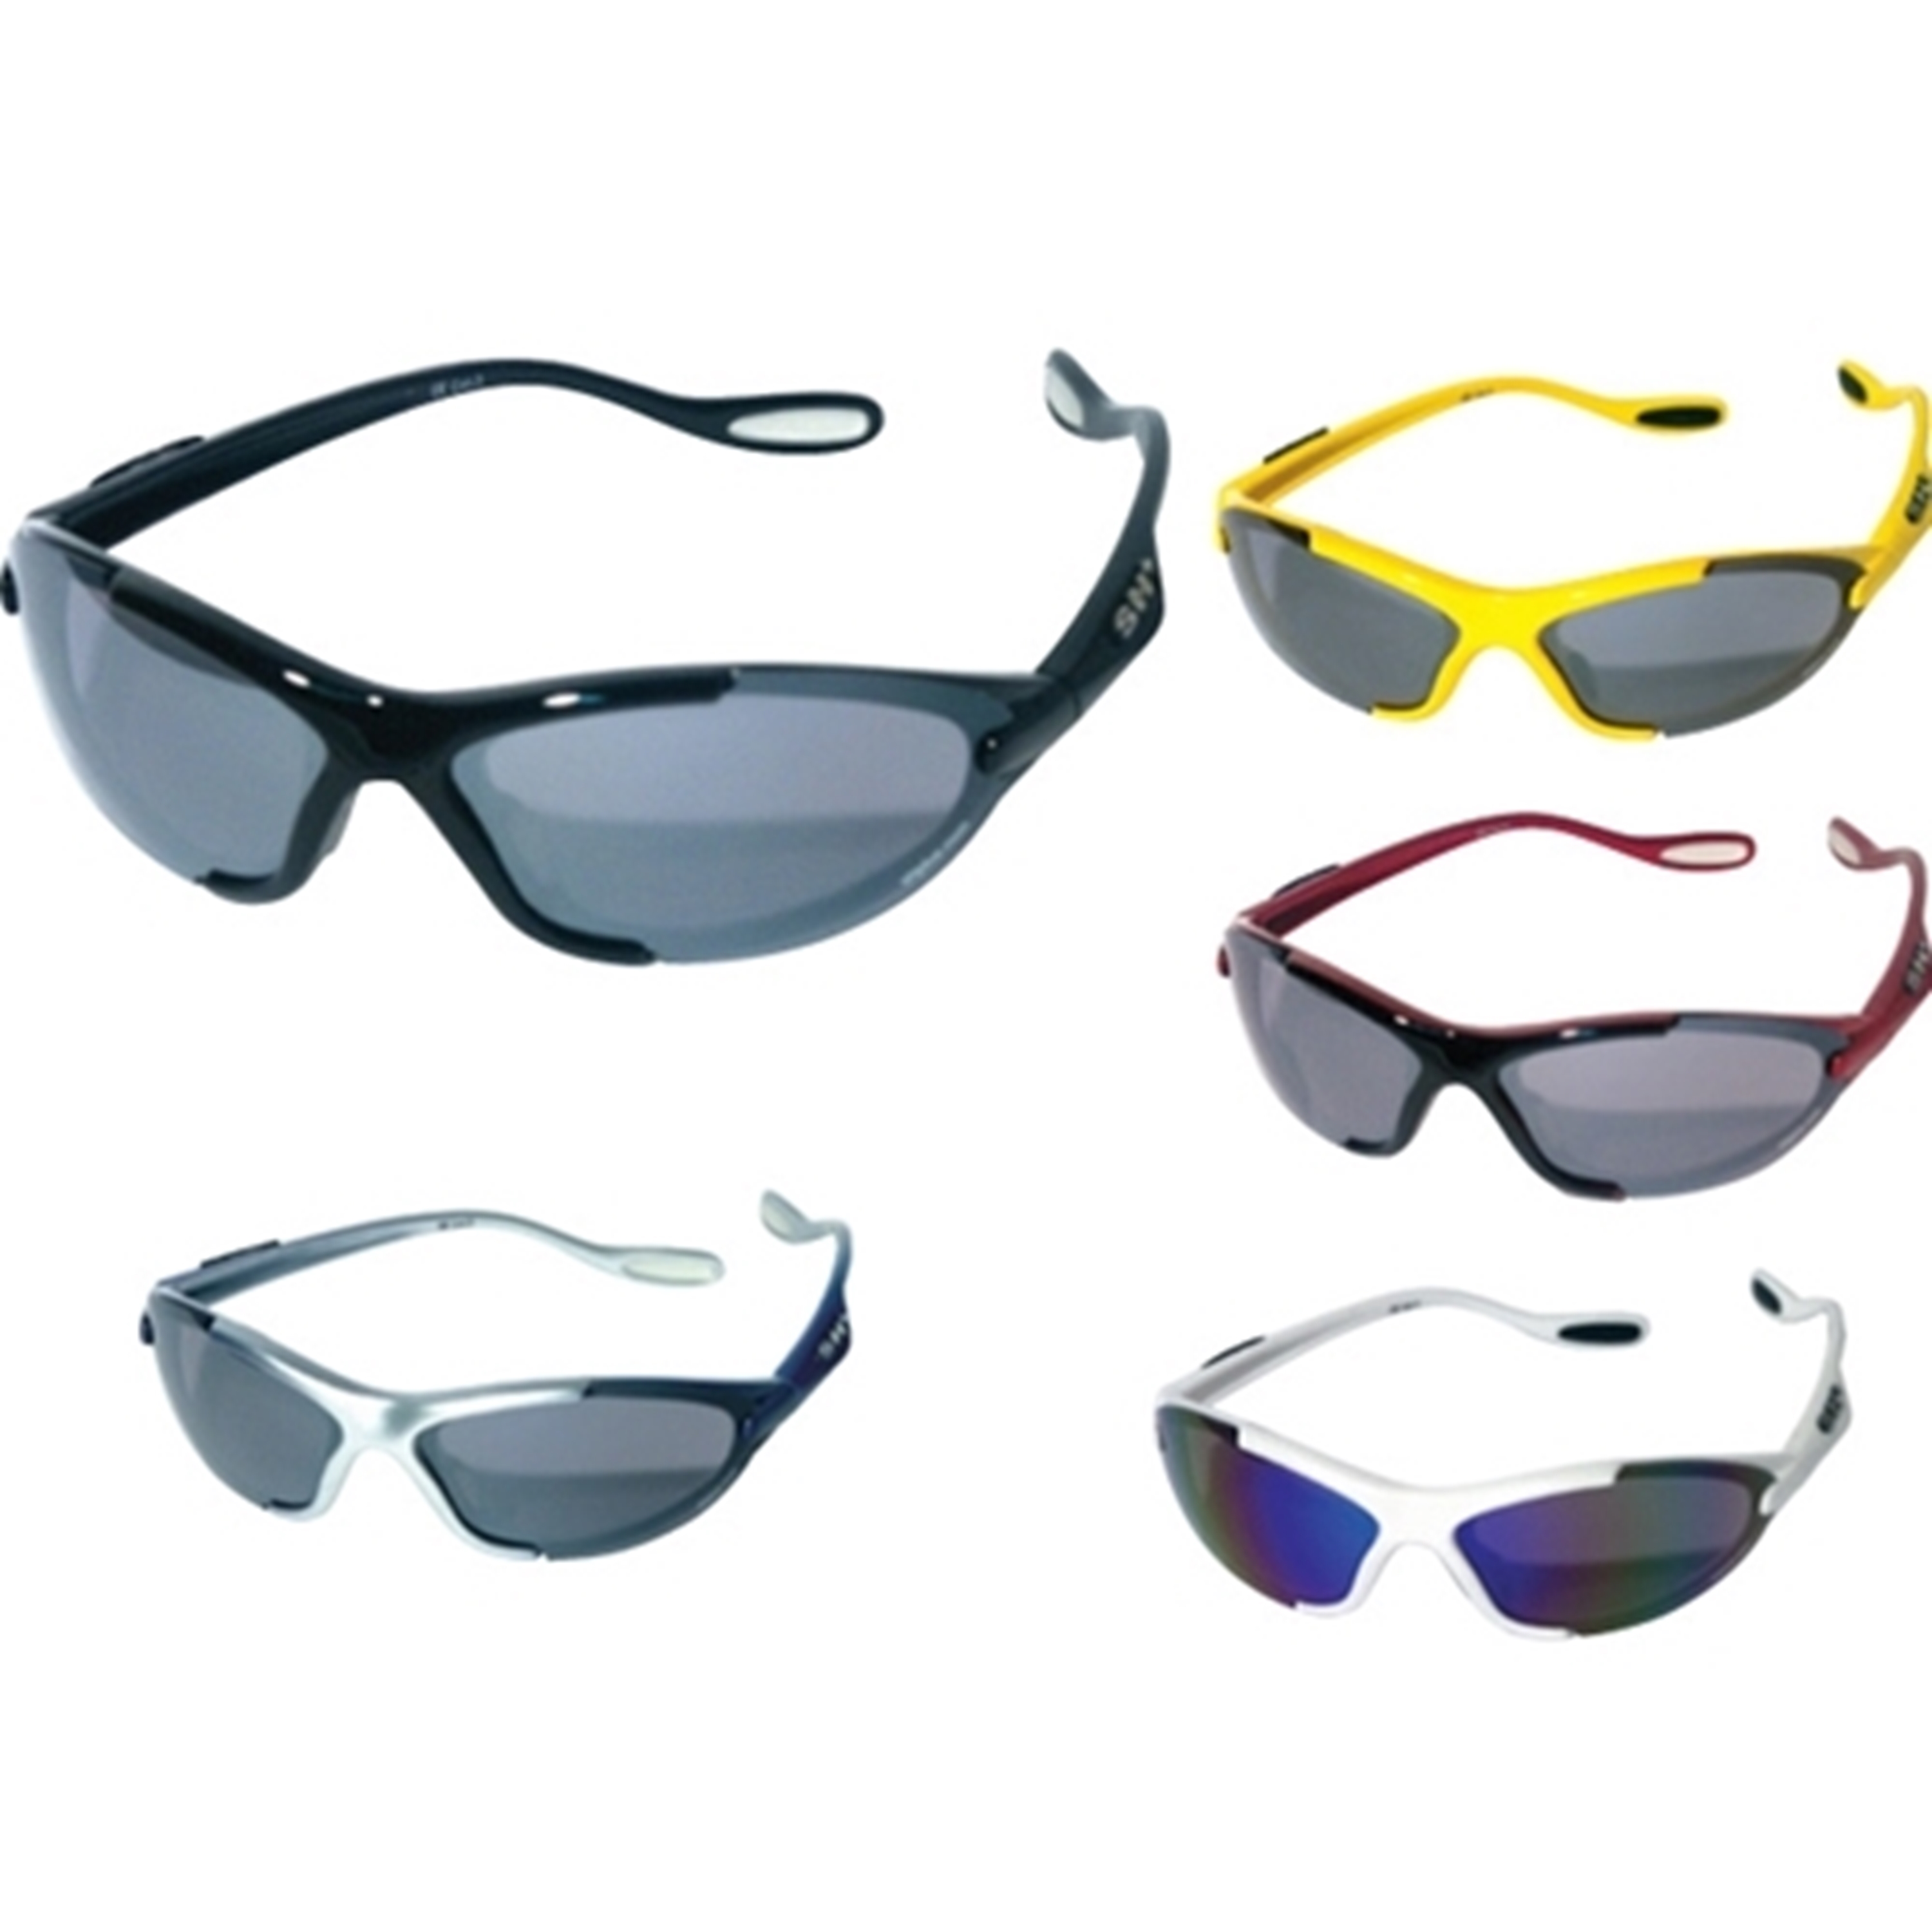 Transcend Blinke tale športna očala SH Plus RG-ULTRA | BikeShop Radlje